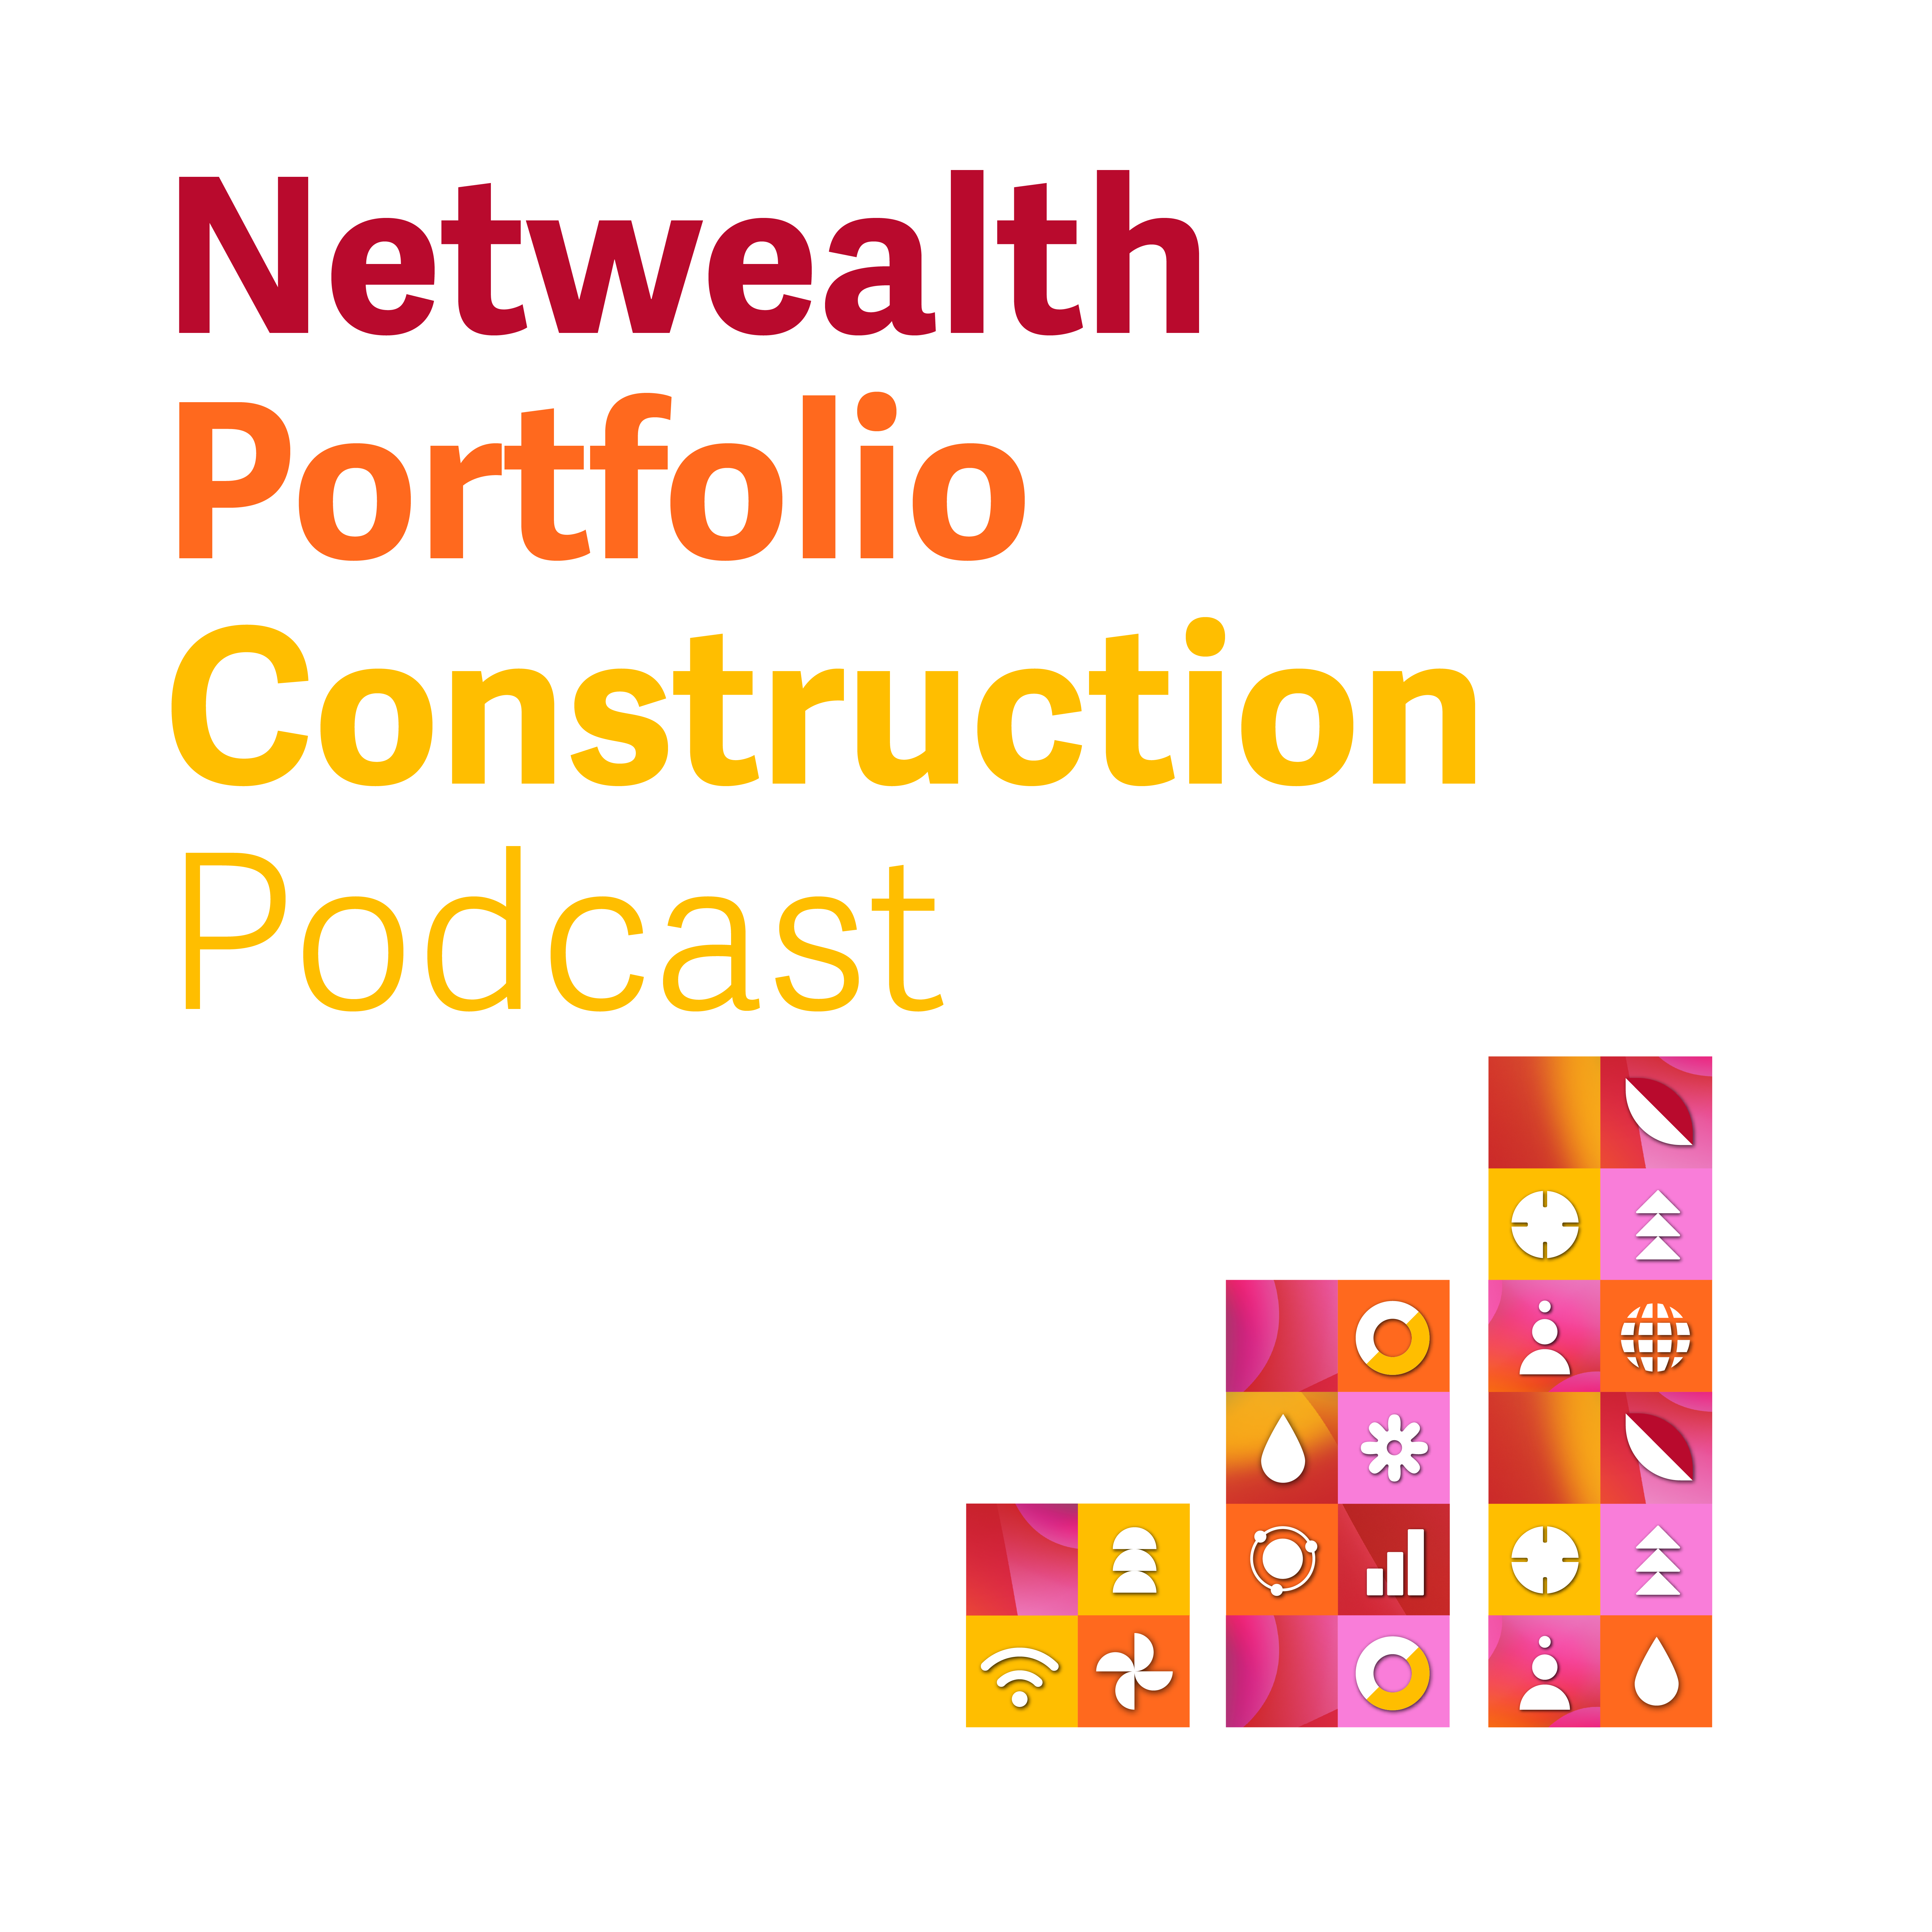 The Netwealth Portfolio Construction Podcast